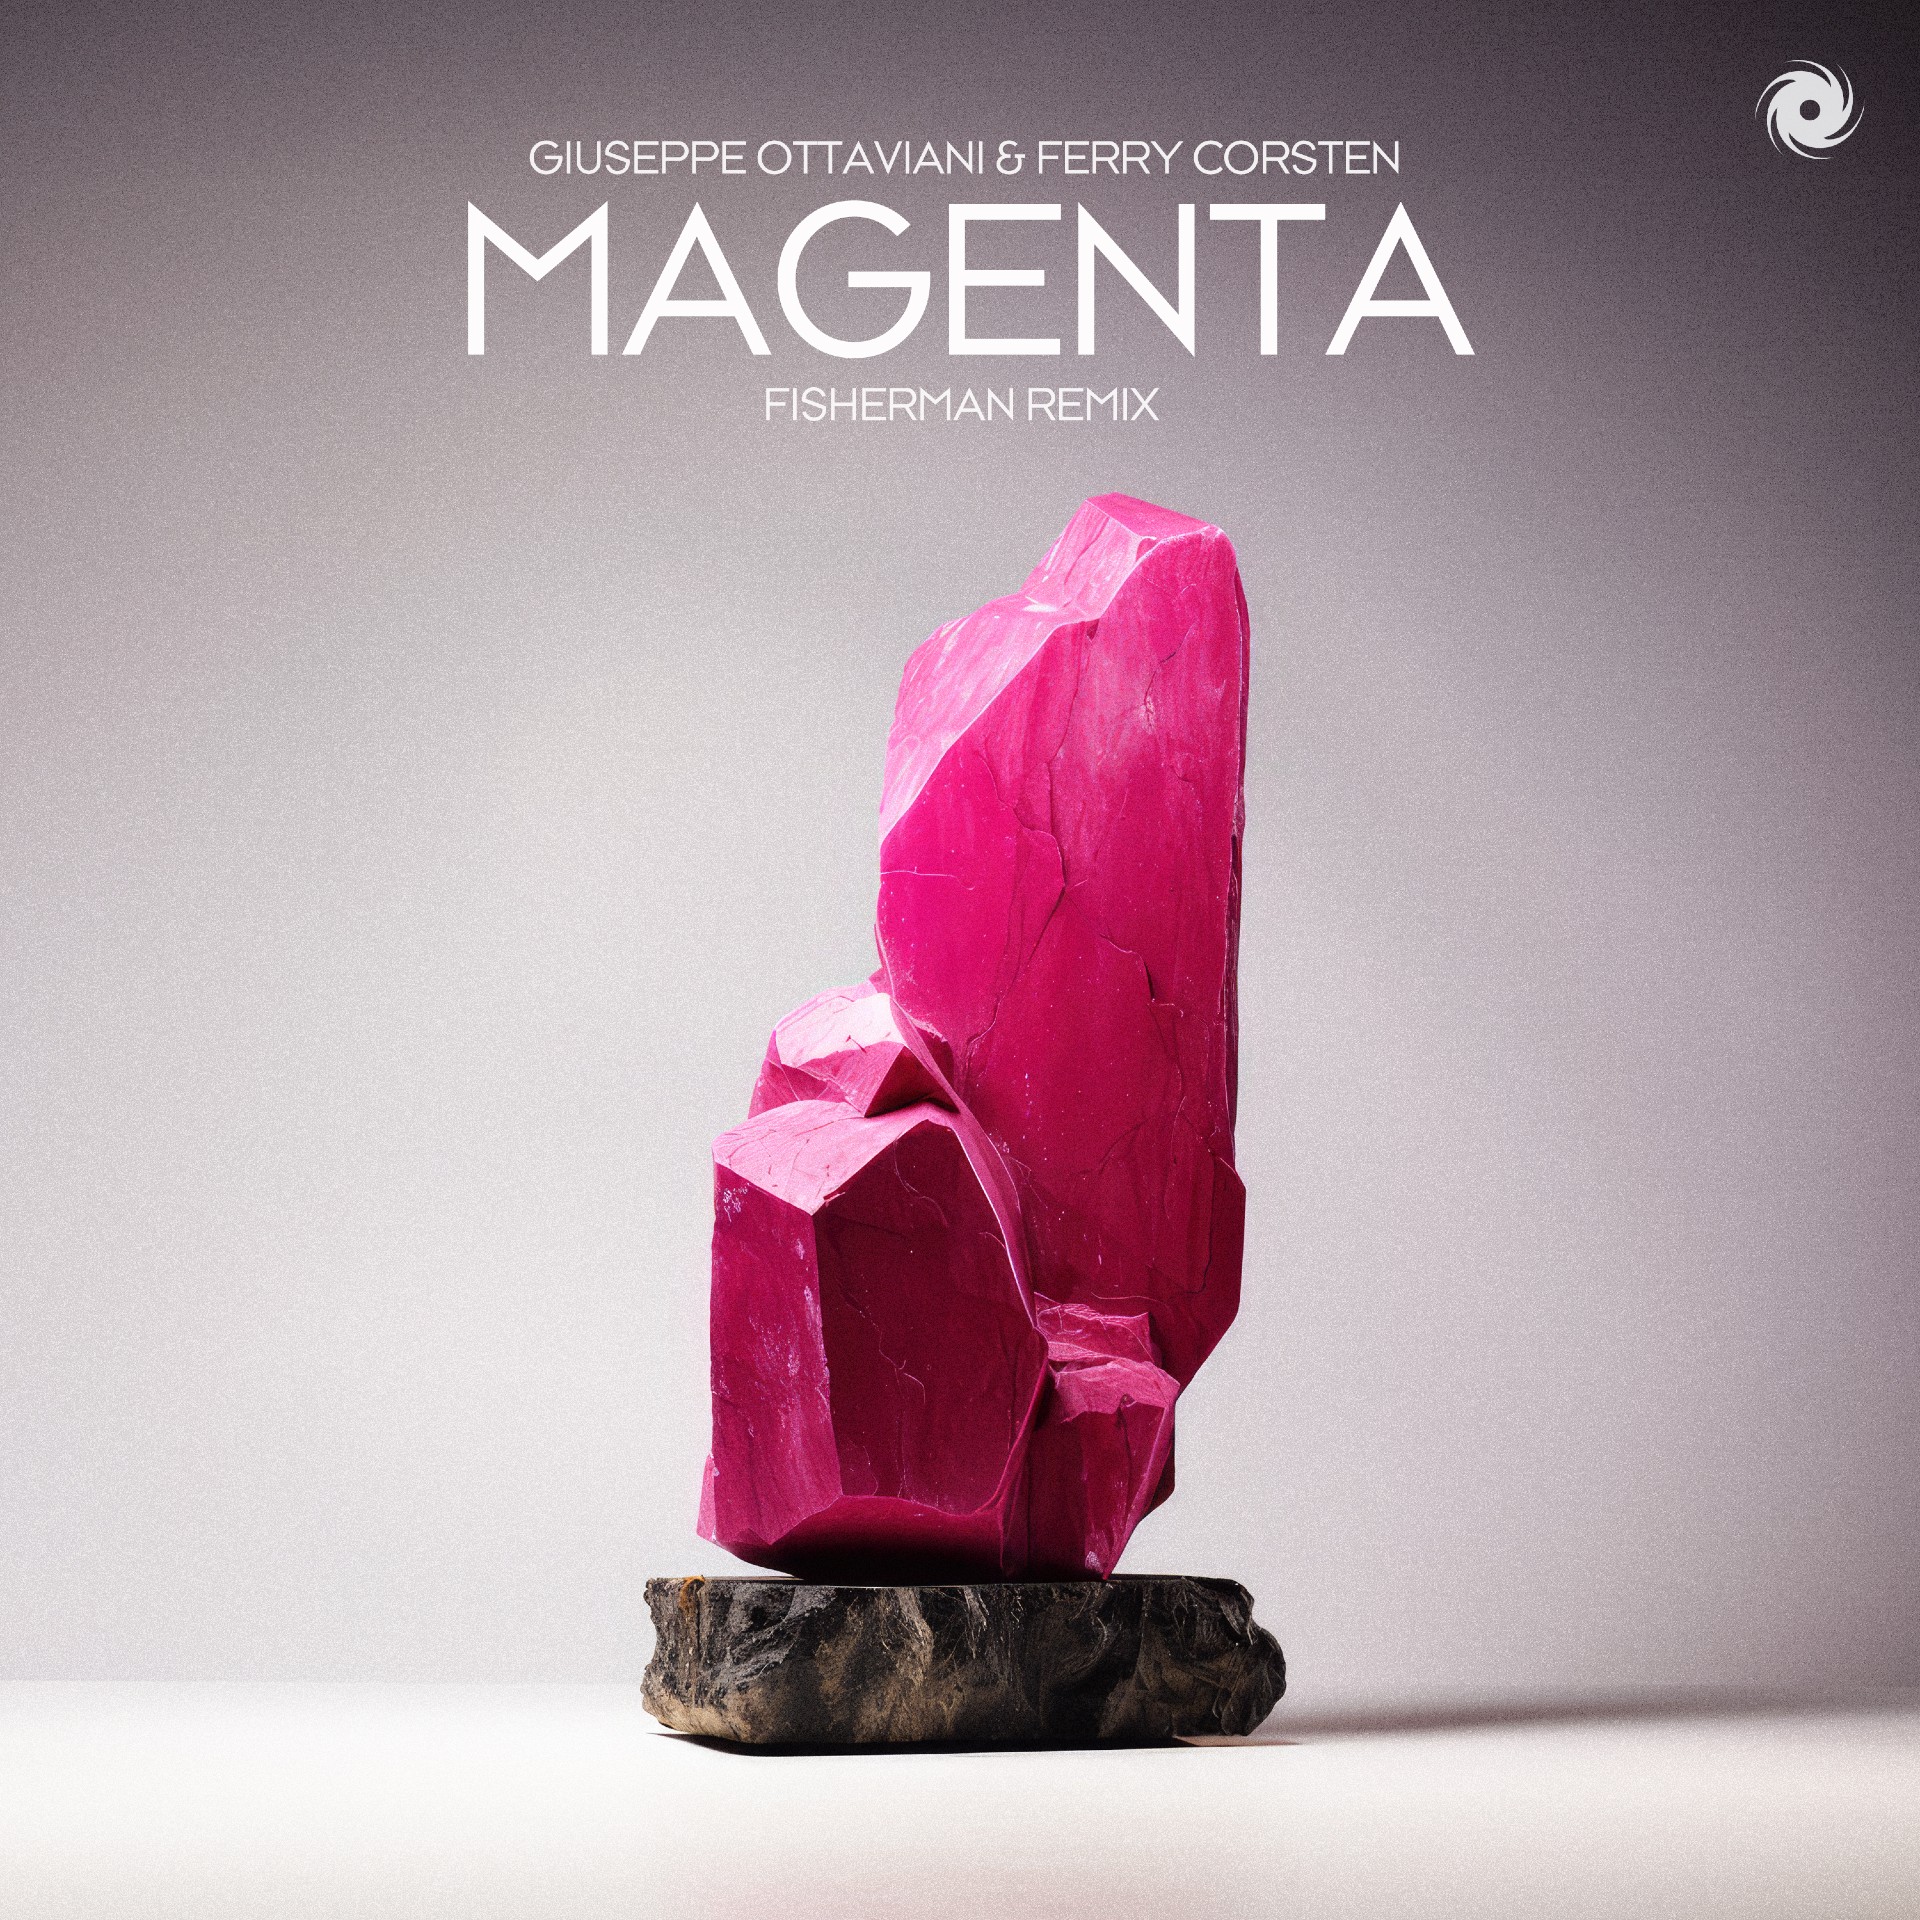 Giuseppe Ottaviani and Ferry Corsten presents Magenta (Fisherman Remix) on Black Hole Recordings